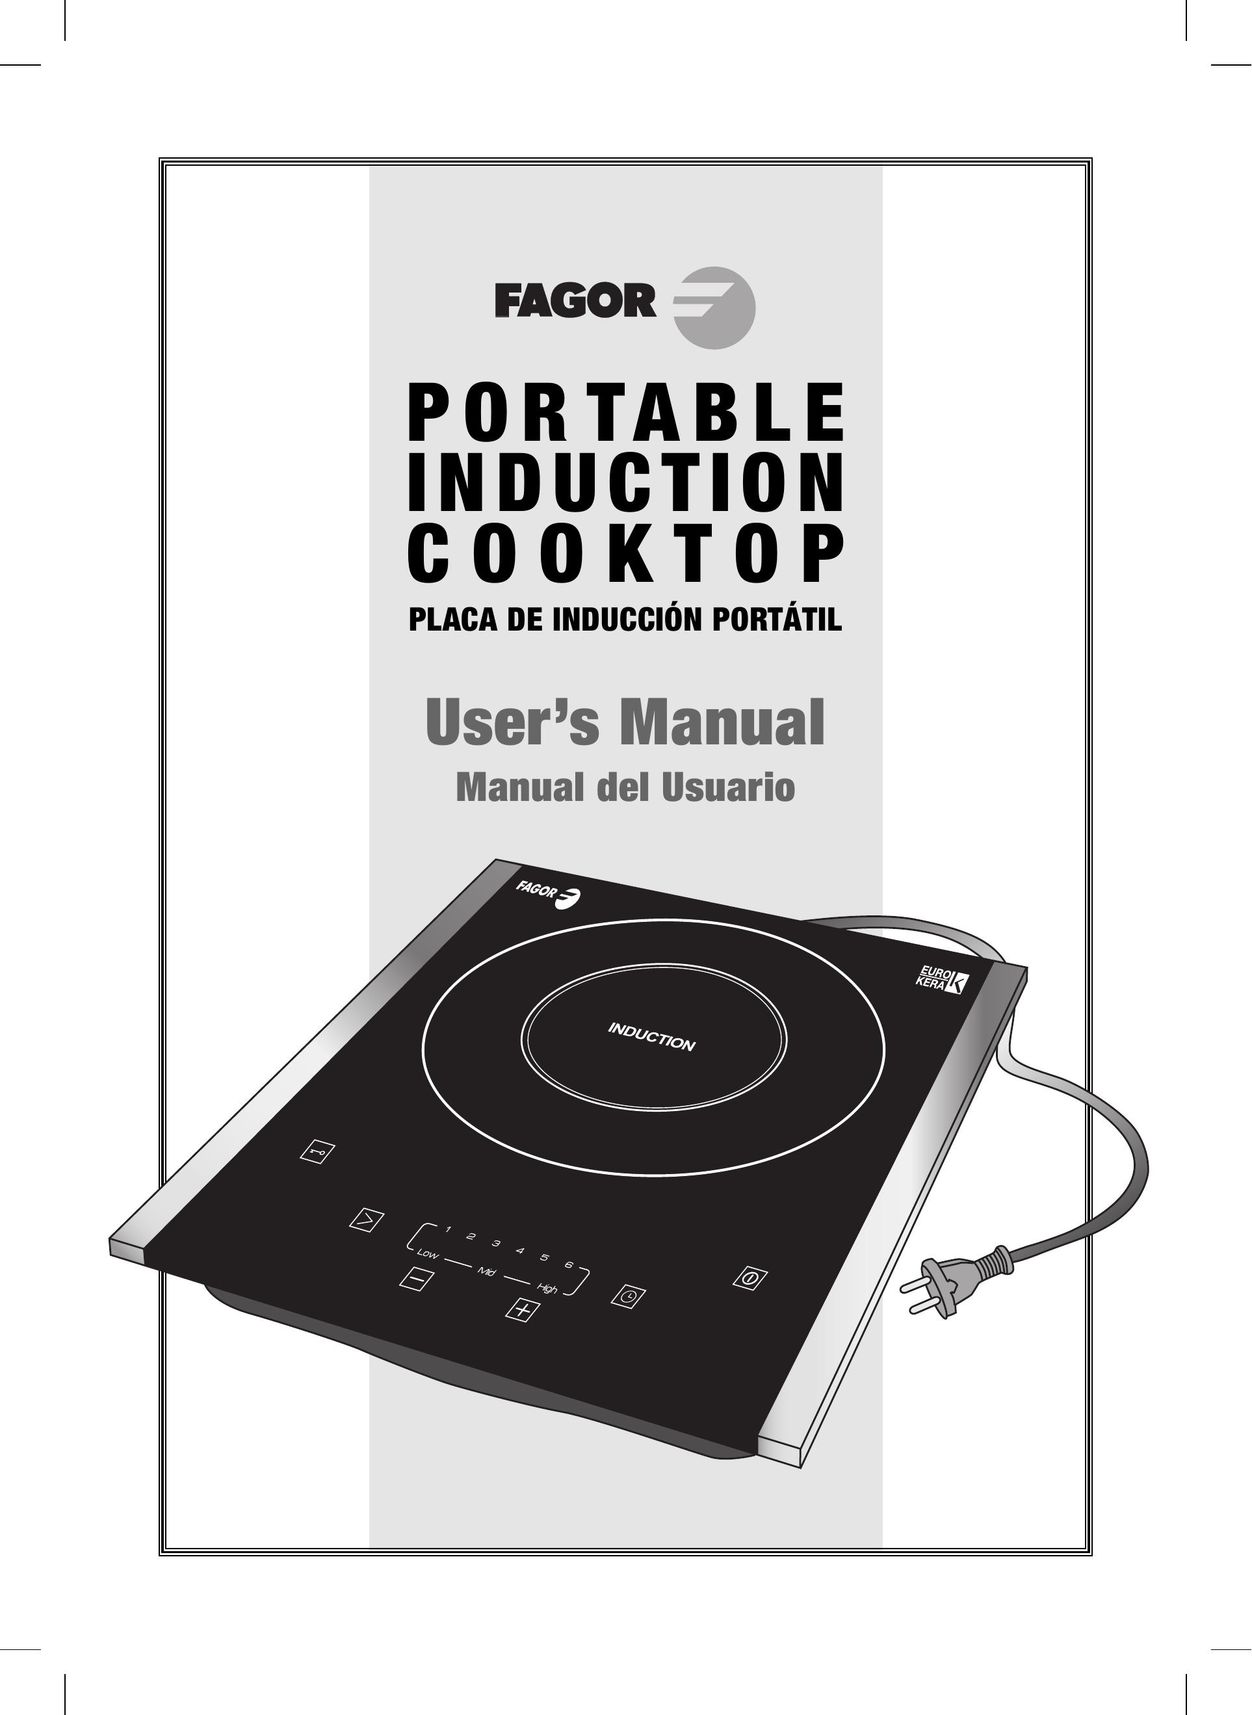 Fagor America Portable Induction Cooktop Cooktop User Manual